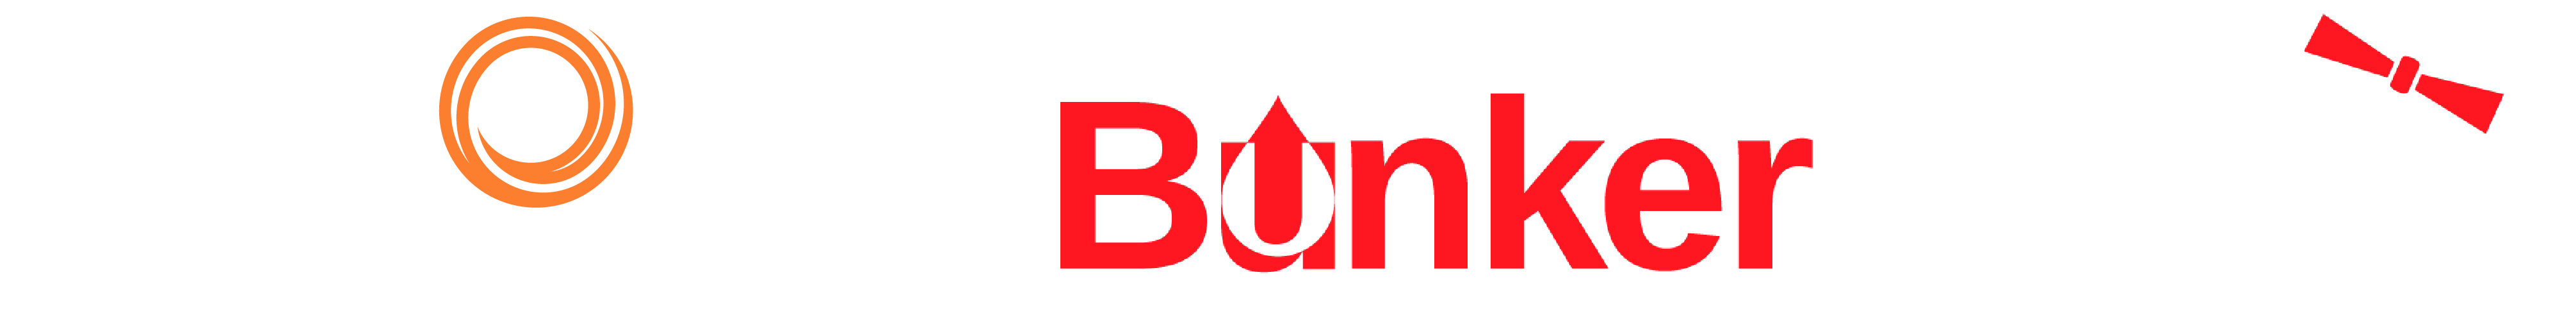 Bunkermetric + Veson Logo (white) 01